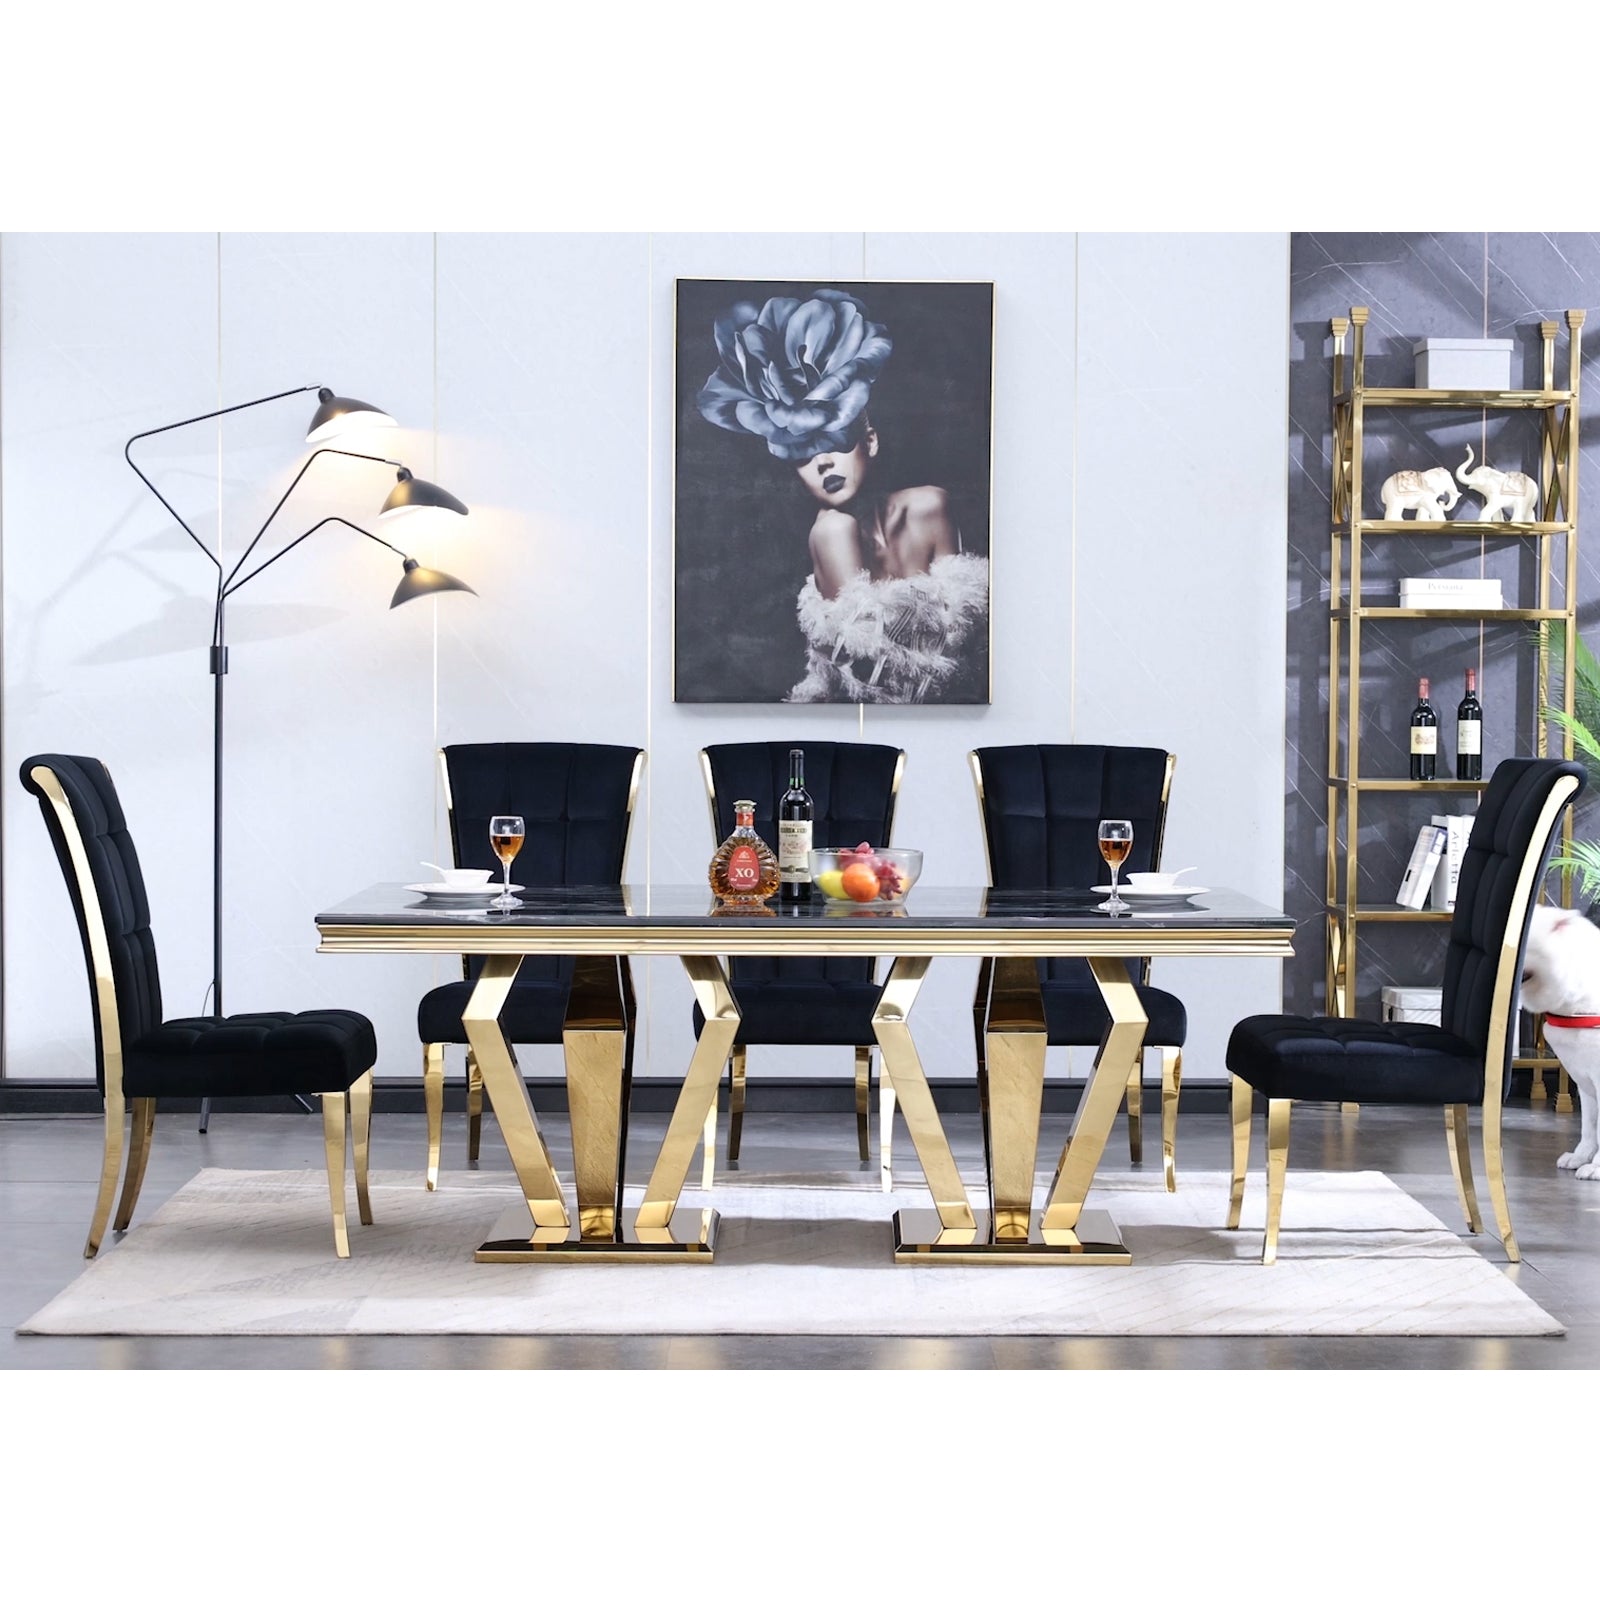 614-Set | AUZ Black and Gold Dining room Sets for 6